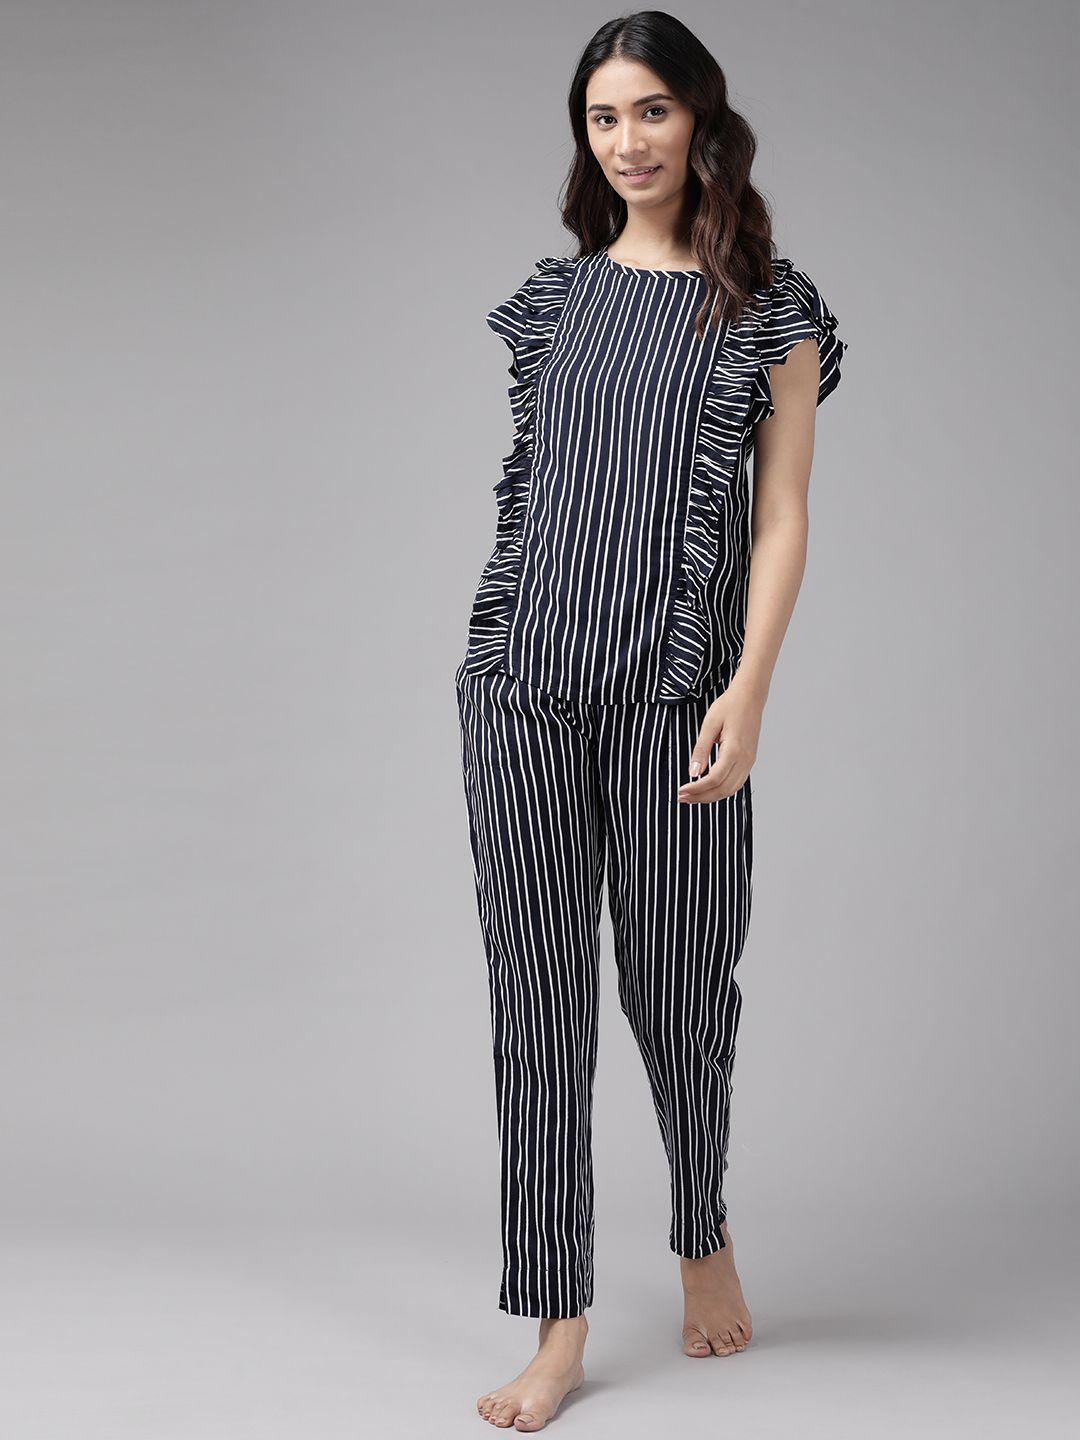 yash gallery women navy blue & white ruffle striped pyjamas set